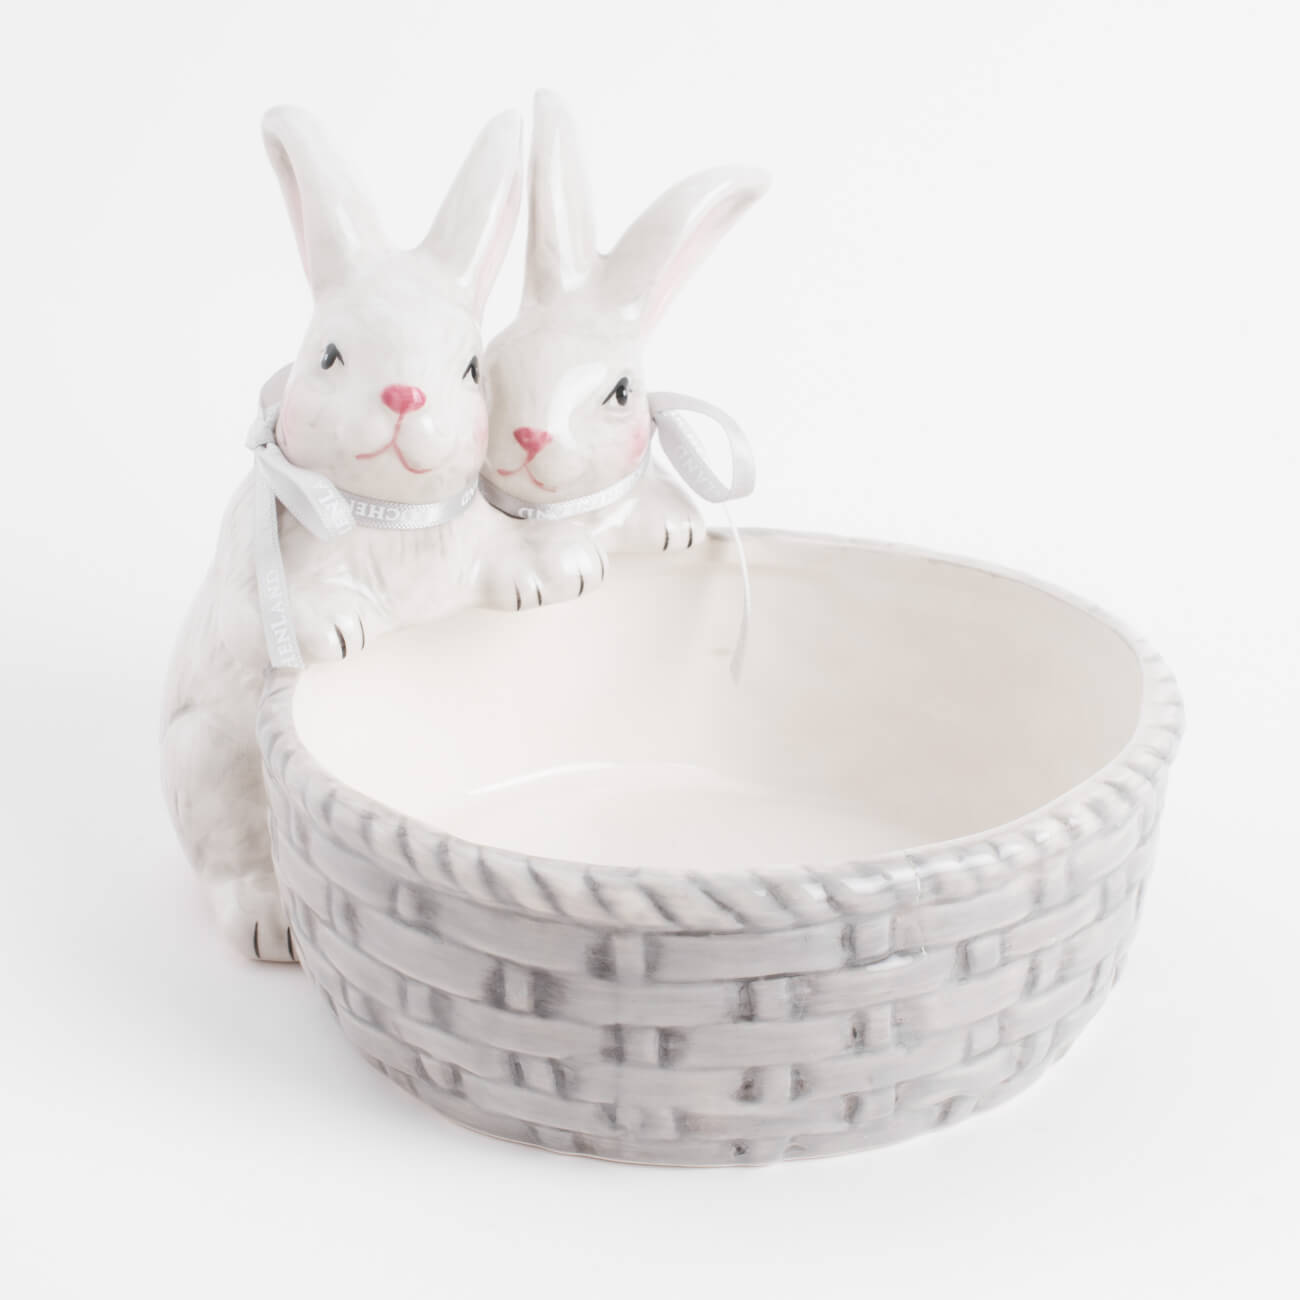 Конфетница, 16х14 см, керамика, серо-молочная, Кролики, Pure Easter конфетница 18x14 см с ручкой керамика молочная кролики в корзине natural easter